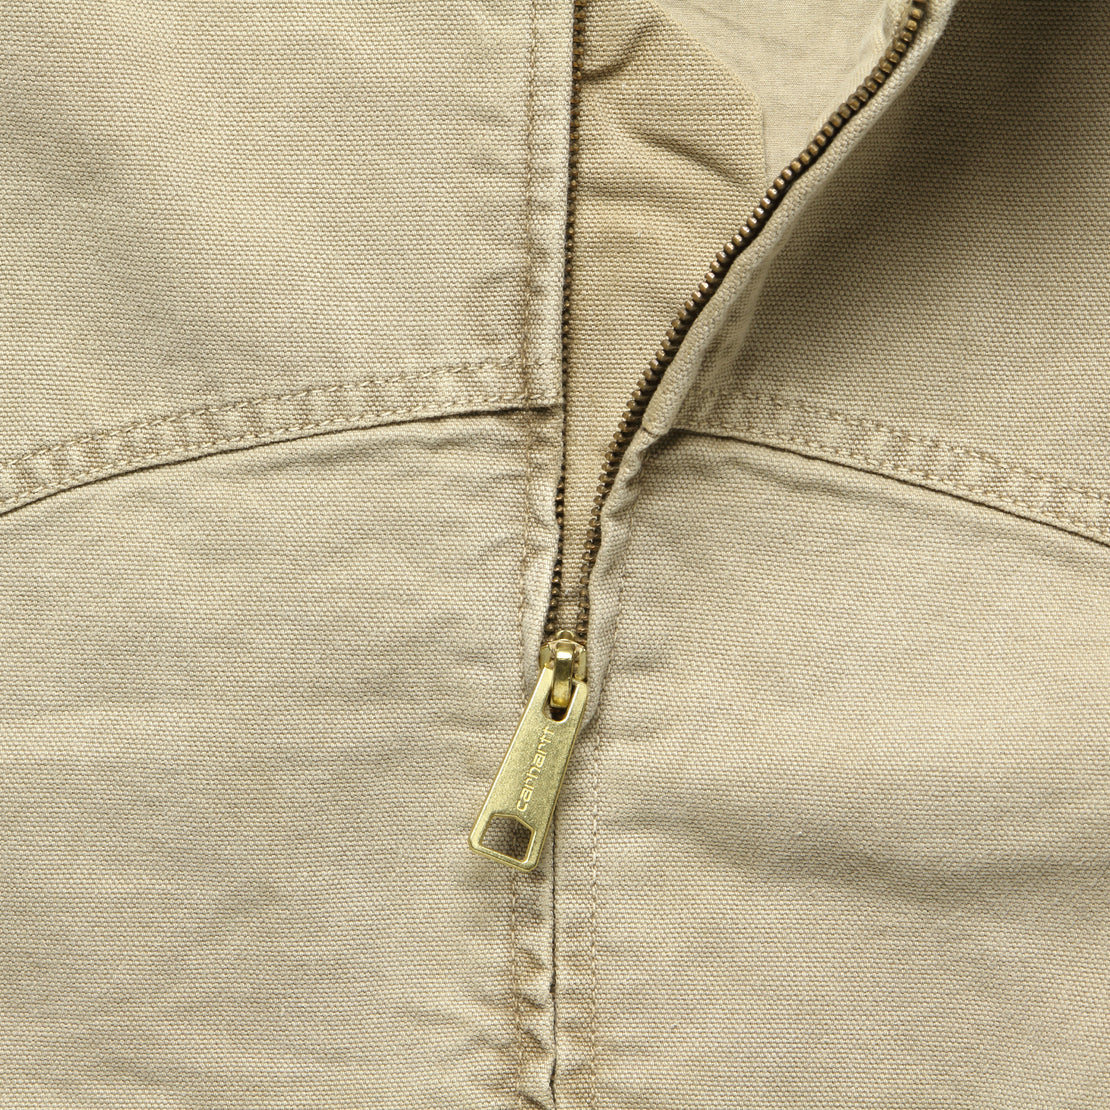 Santa Fe Jacket - Dusty Hamilton Brown - Carhartt WIP - STAG Provisions - Outerwear - Coat / Jacket